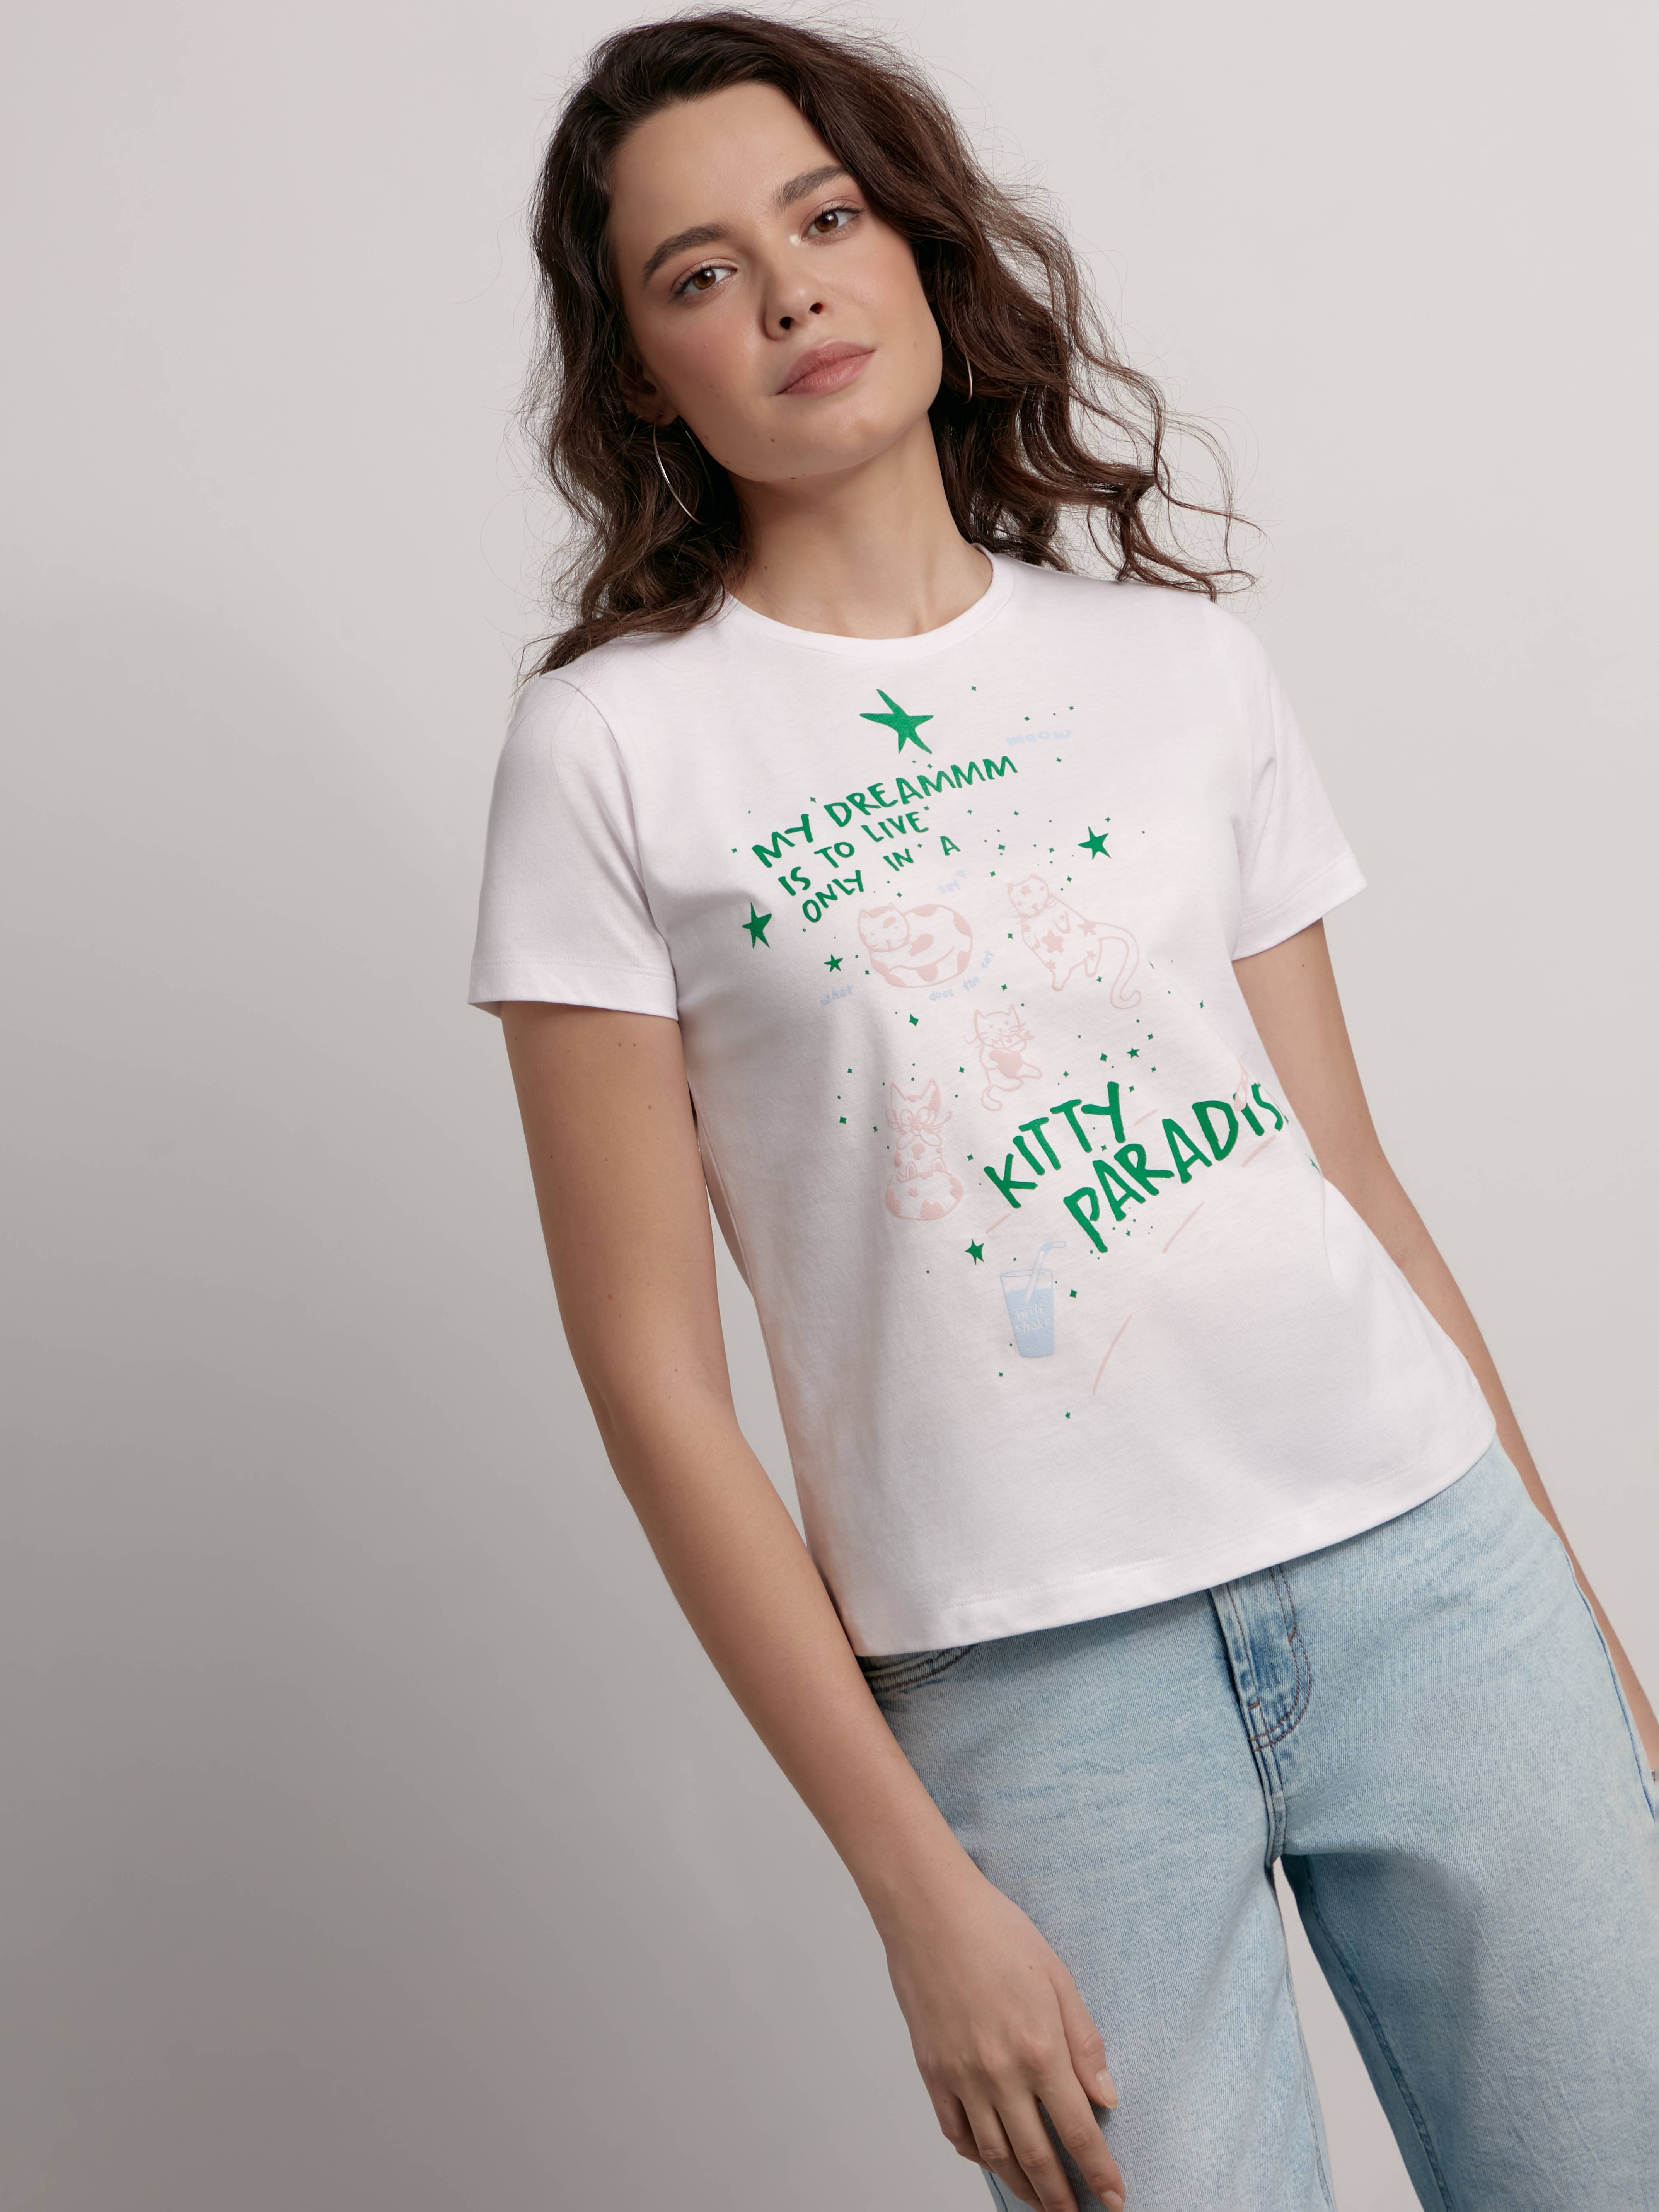 Базовая футболка из хлопка с рисунком «Kitty paradise» LD 2139 Conte ⭐️, цвет white, размер 170-100/xl